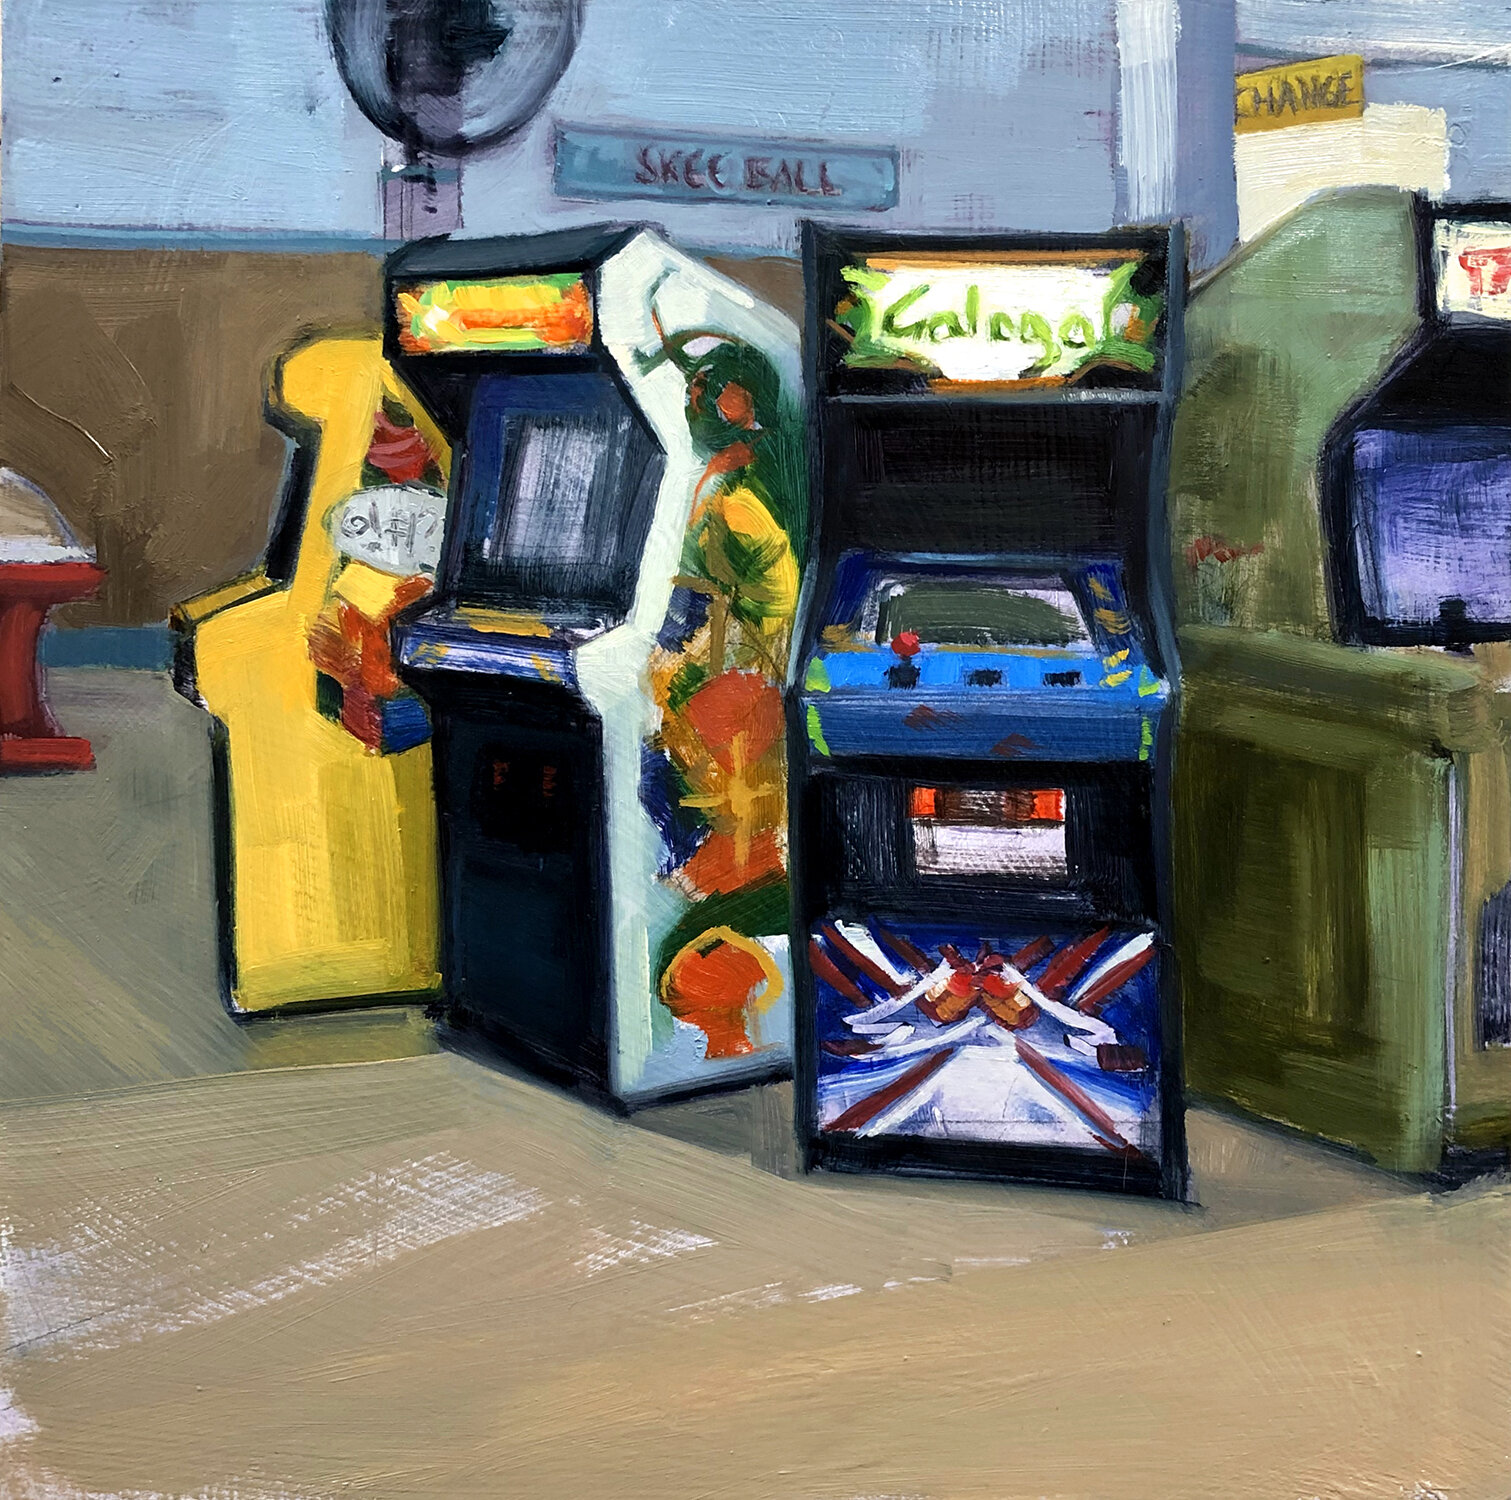 Arcade 